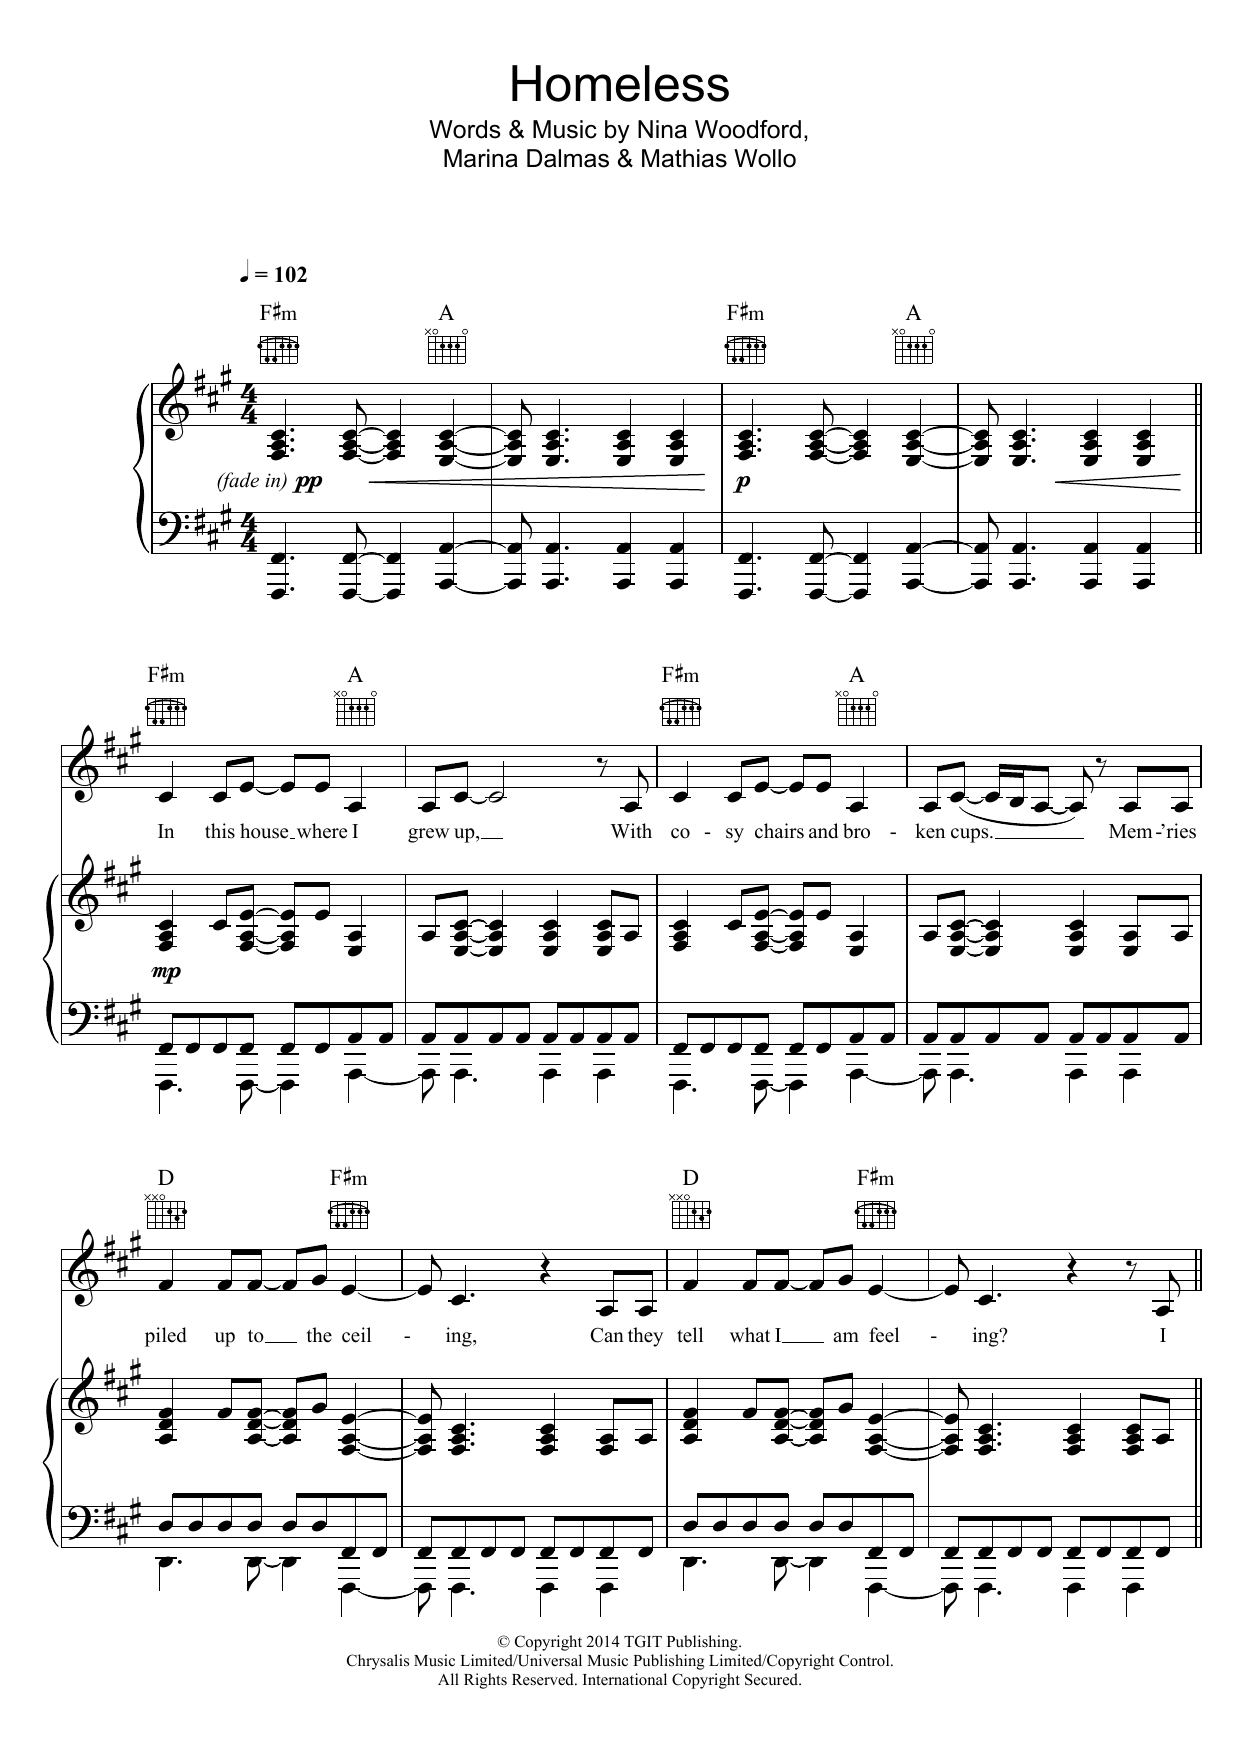 Marina Kaye Homeless Sheet Music Notes & Chords for Piano, Vocal & Guitar (Right-Hand Melody) - Download or Print PDF